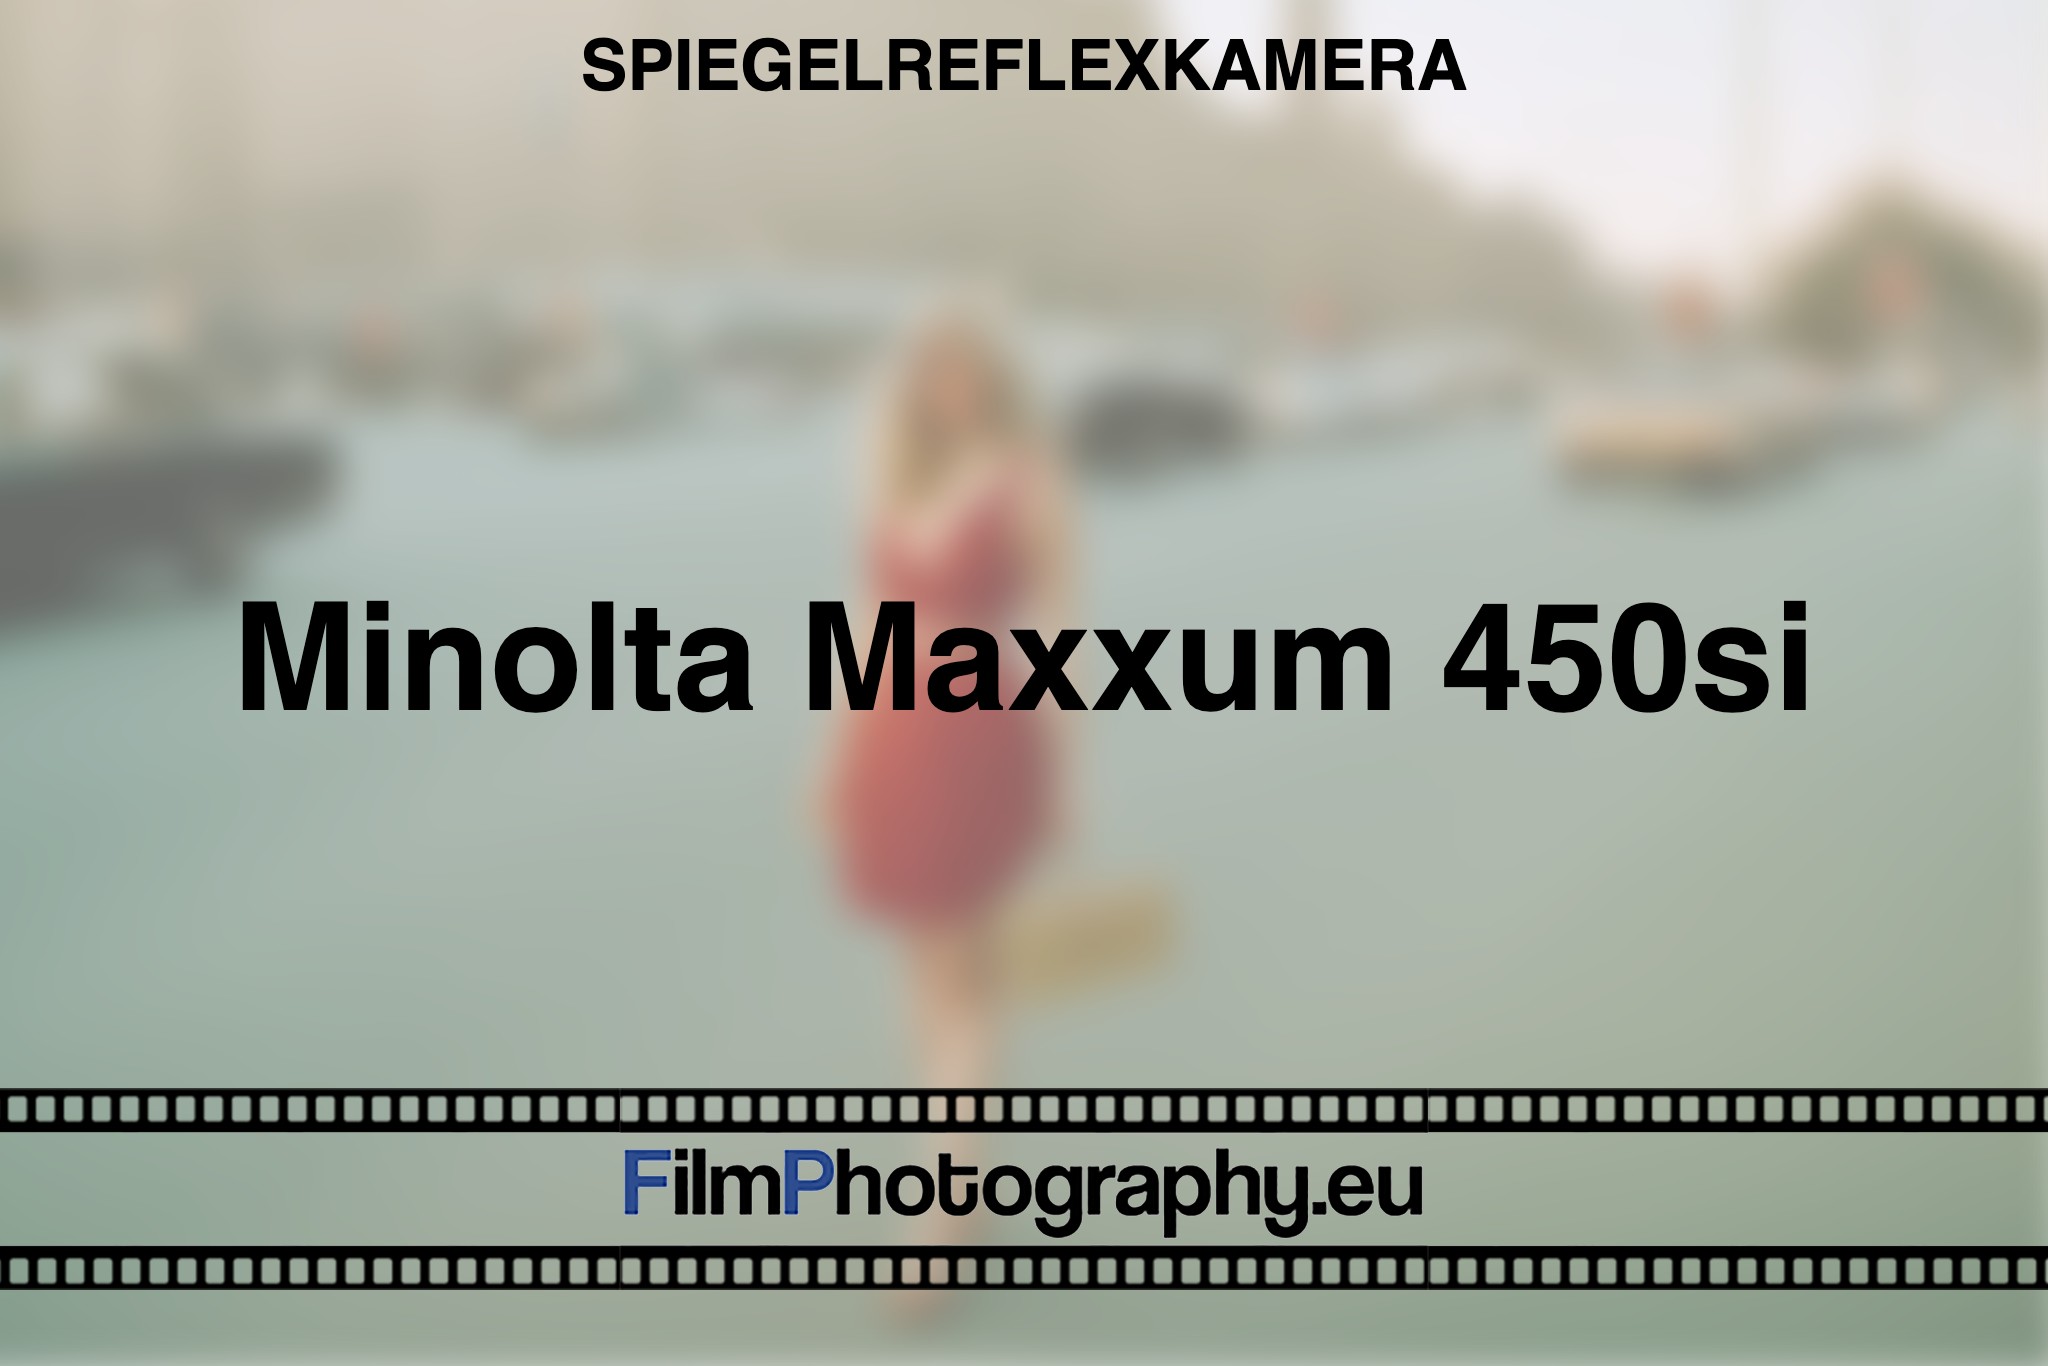 minolta-maxxum-450si-spiegelreflexkamera-bnv